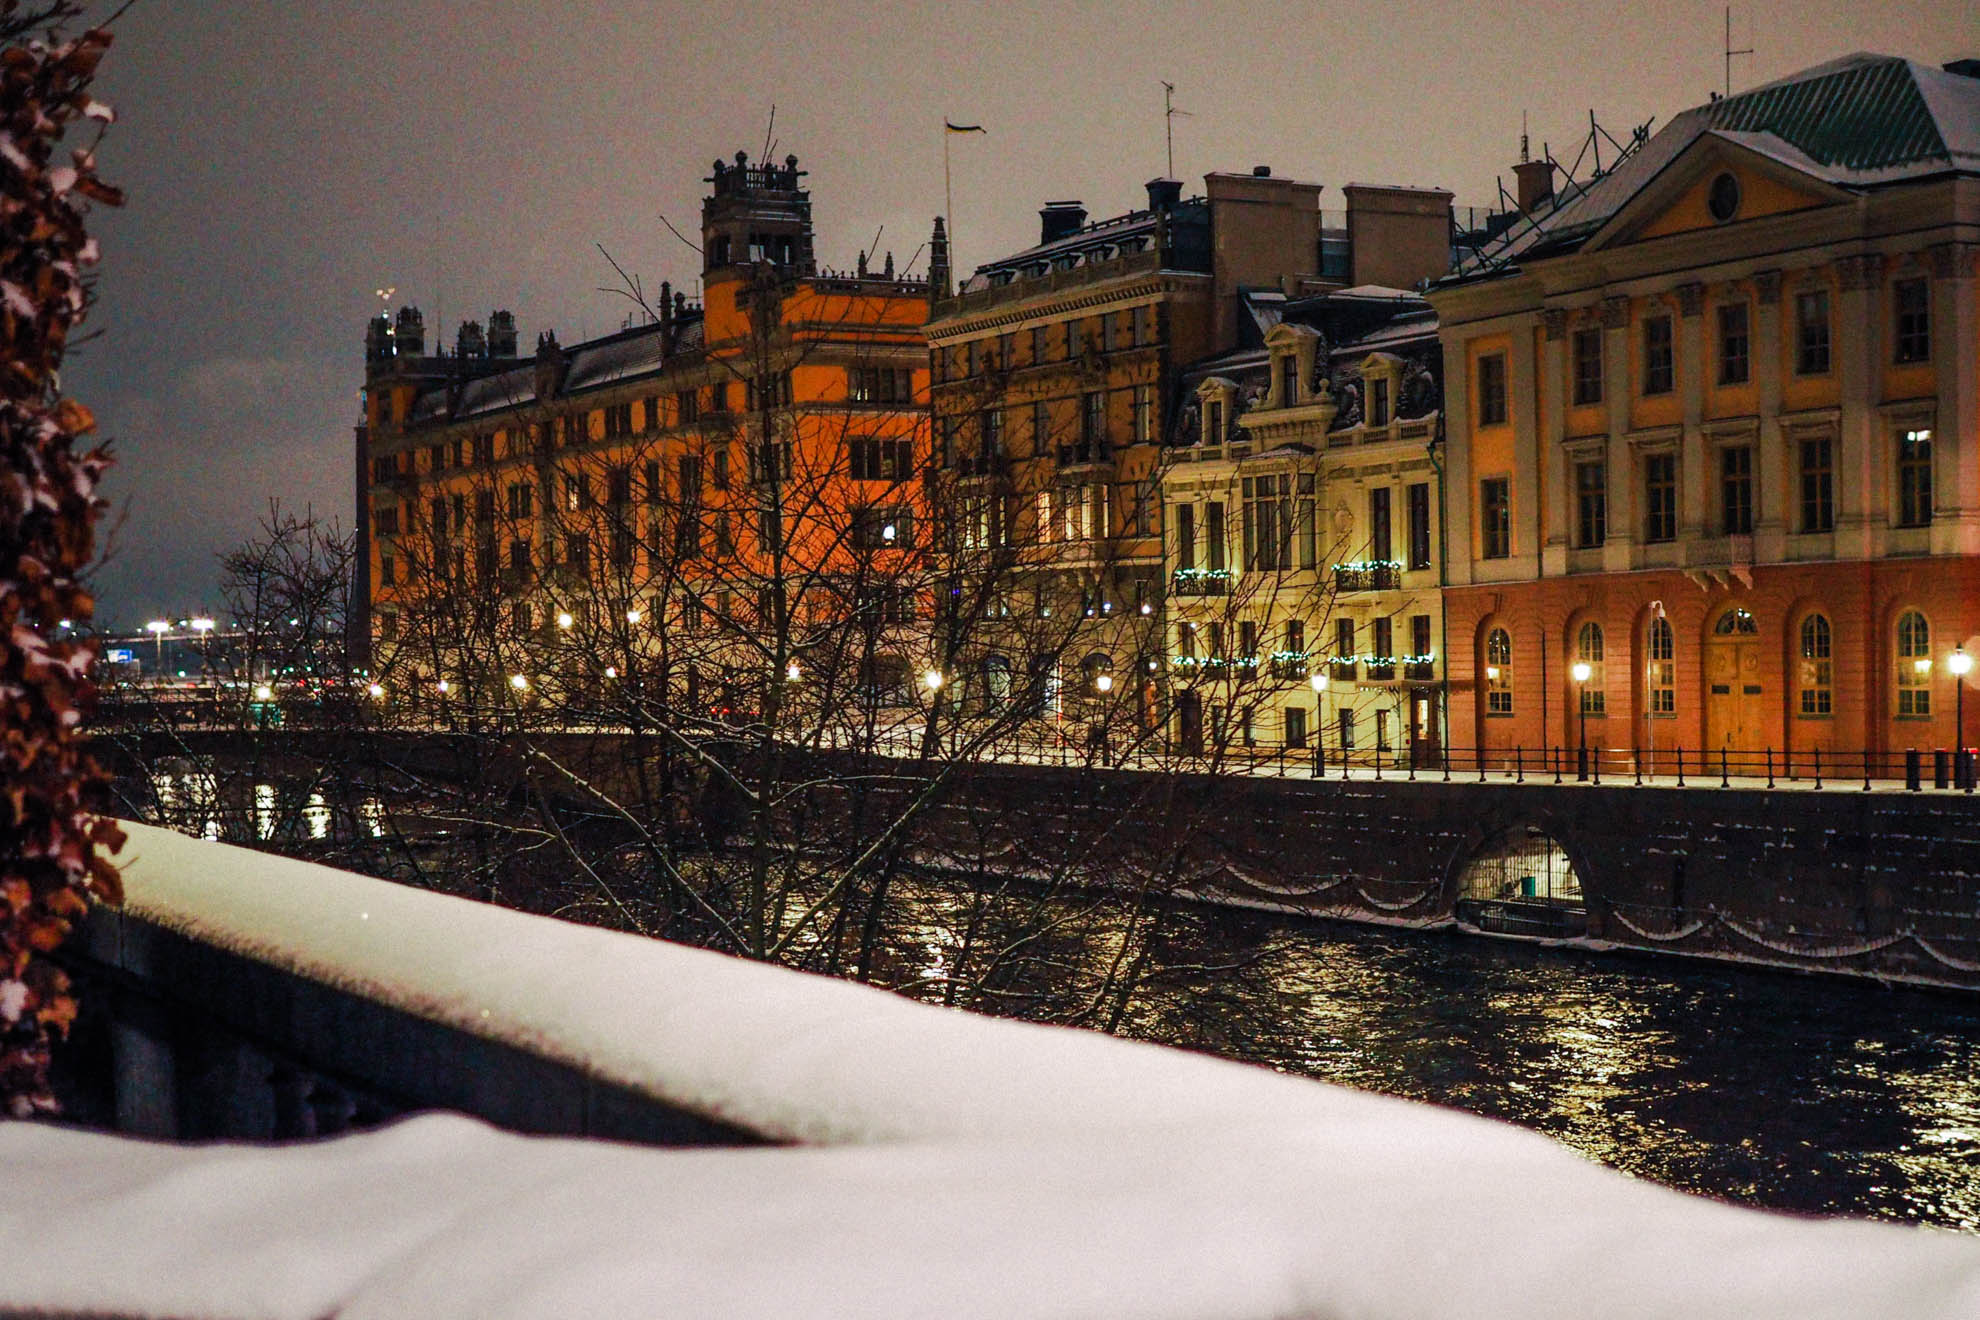 Visting Stockholm in winter